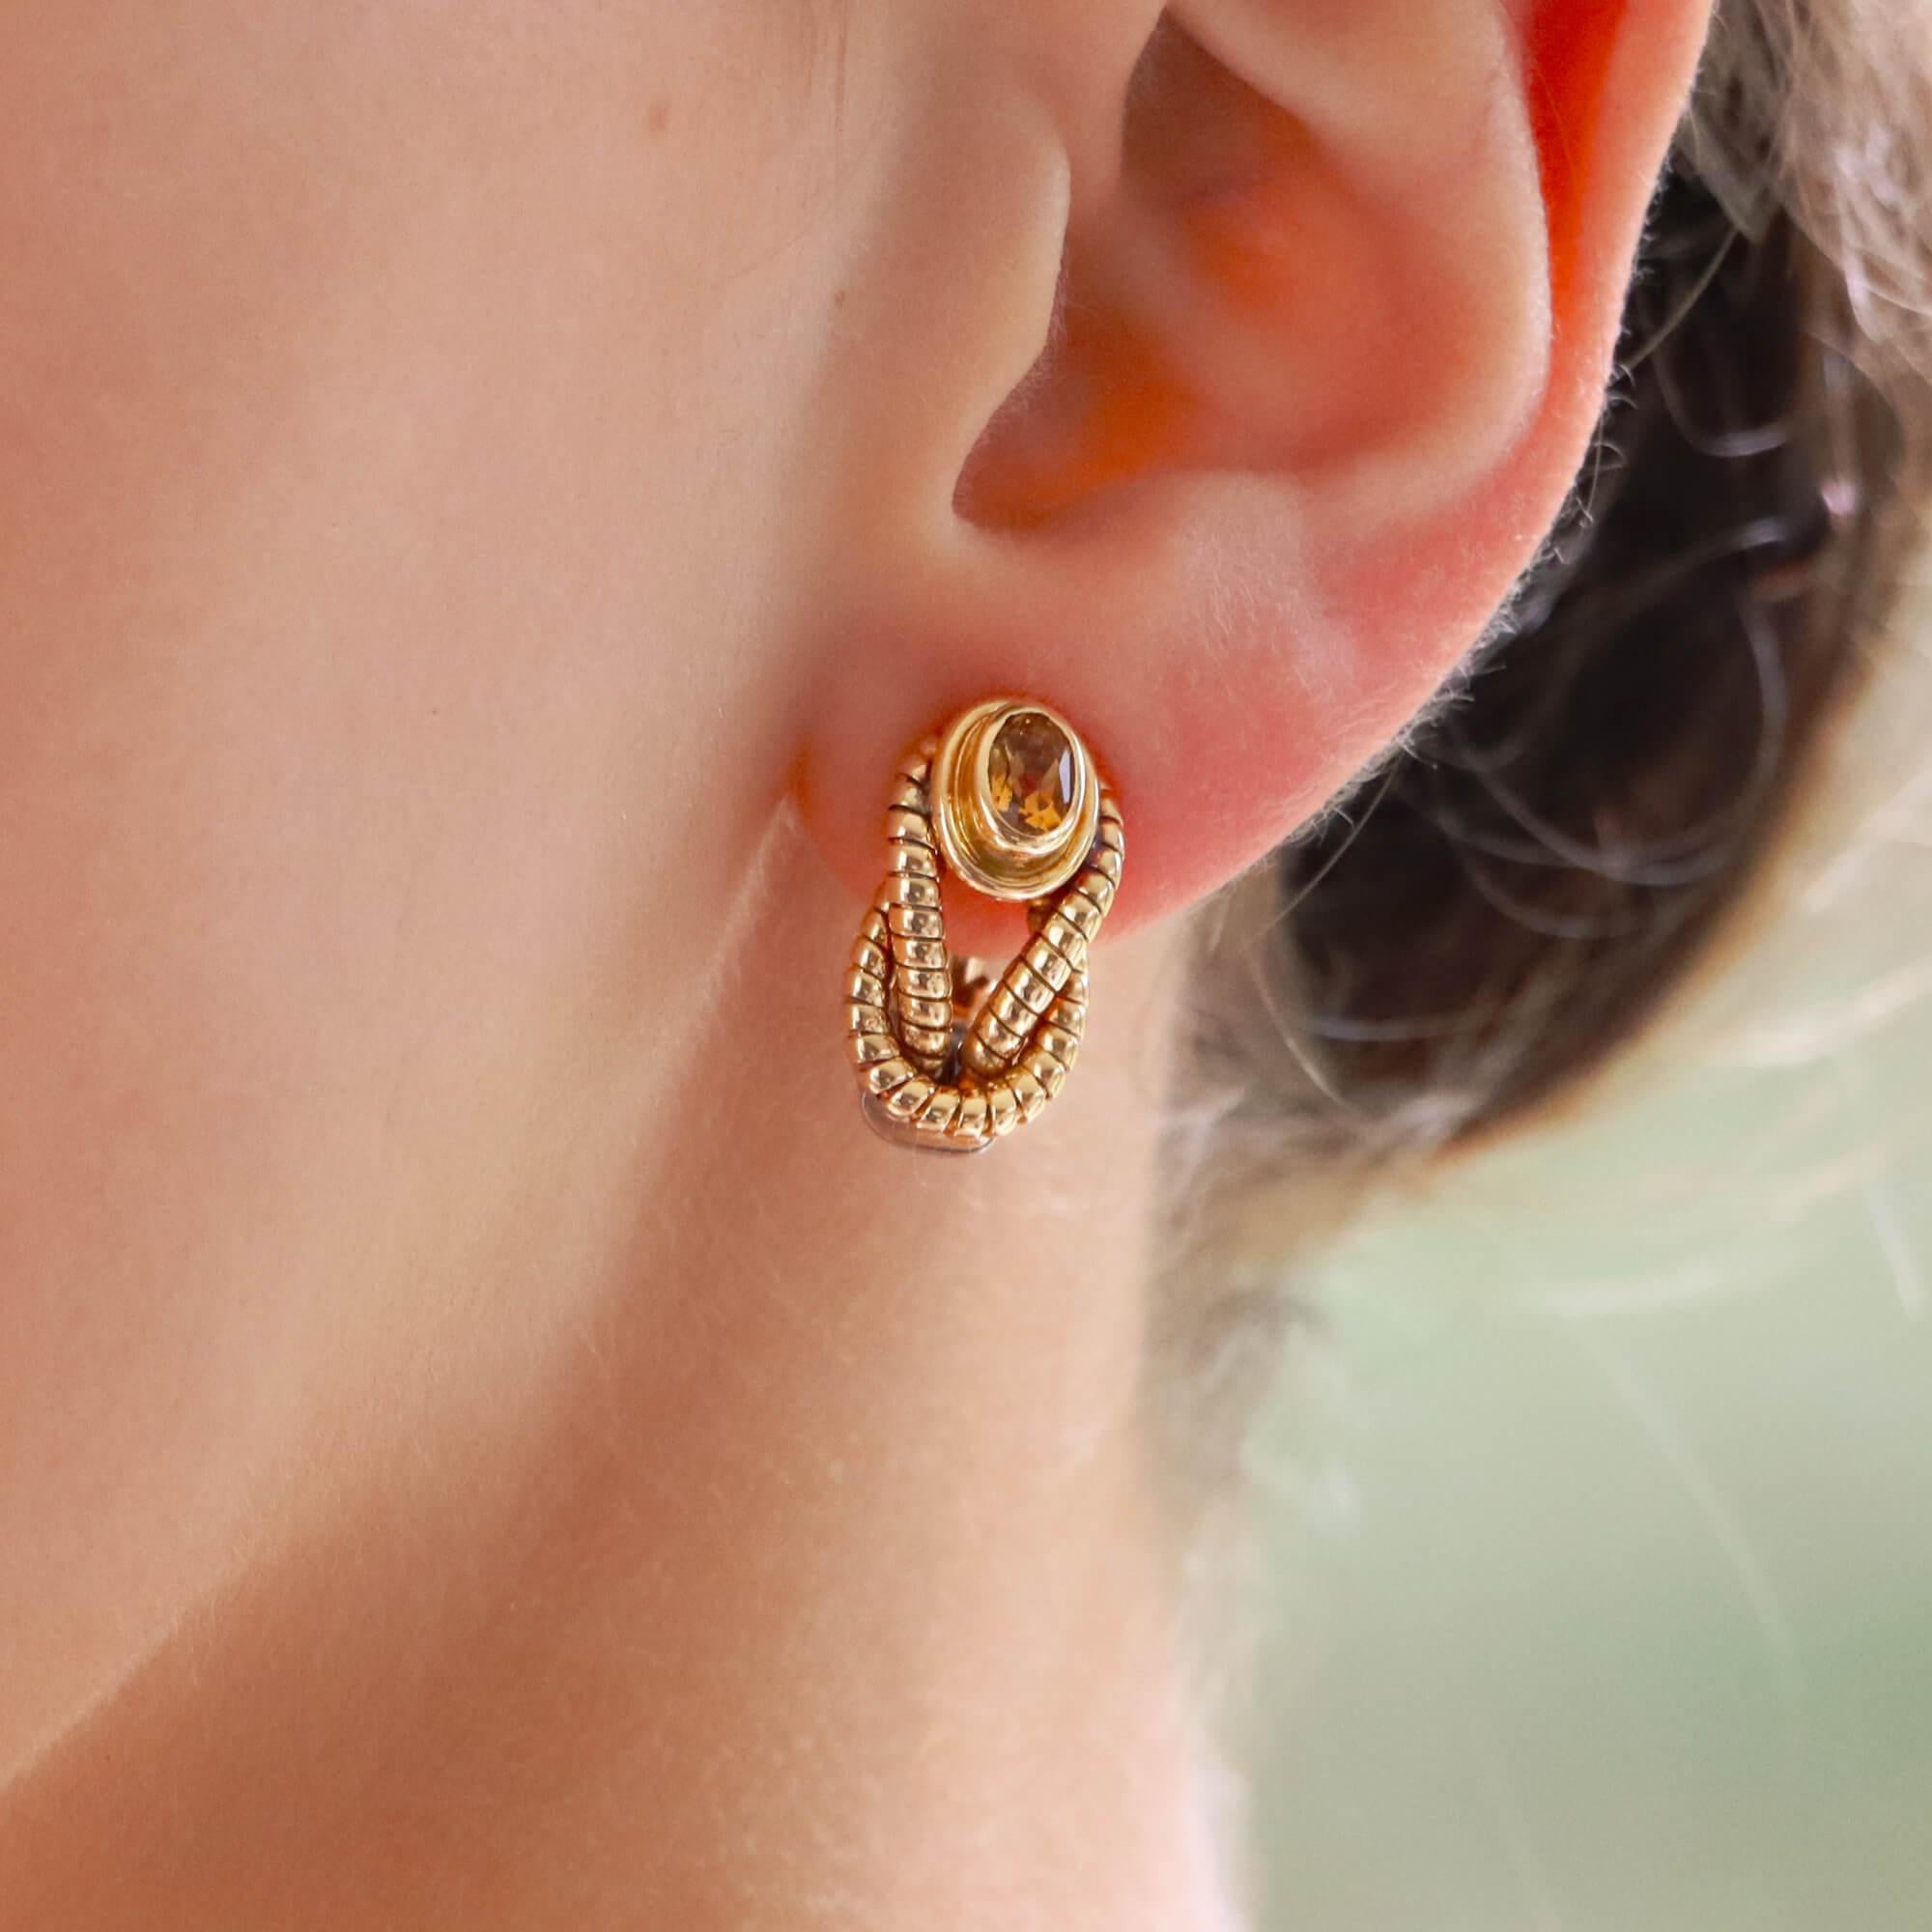 hercules earrings